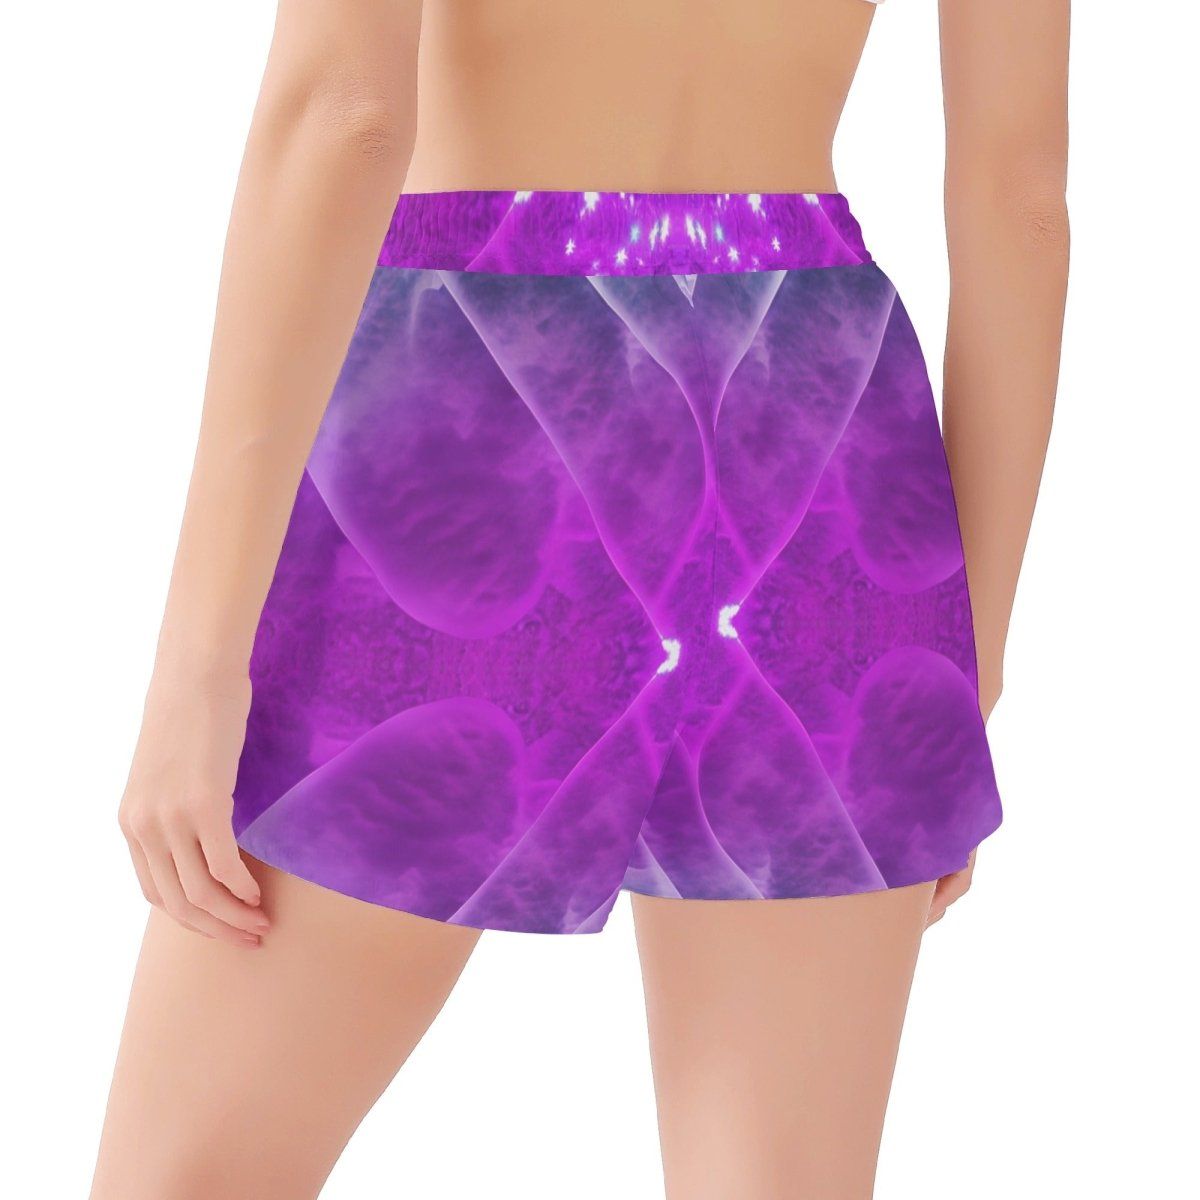 Teal Purple  Print Womens Beach Shorts - Influencer  Streamer Ready Casual  Vibrant - Perfect for the Beach - Iron Phoenix GHG